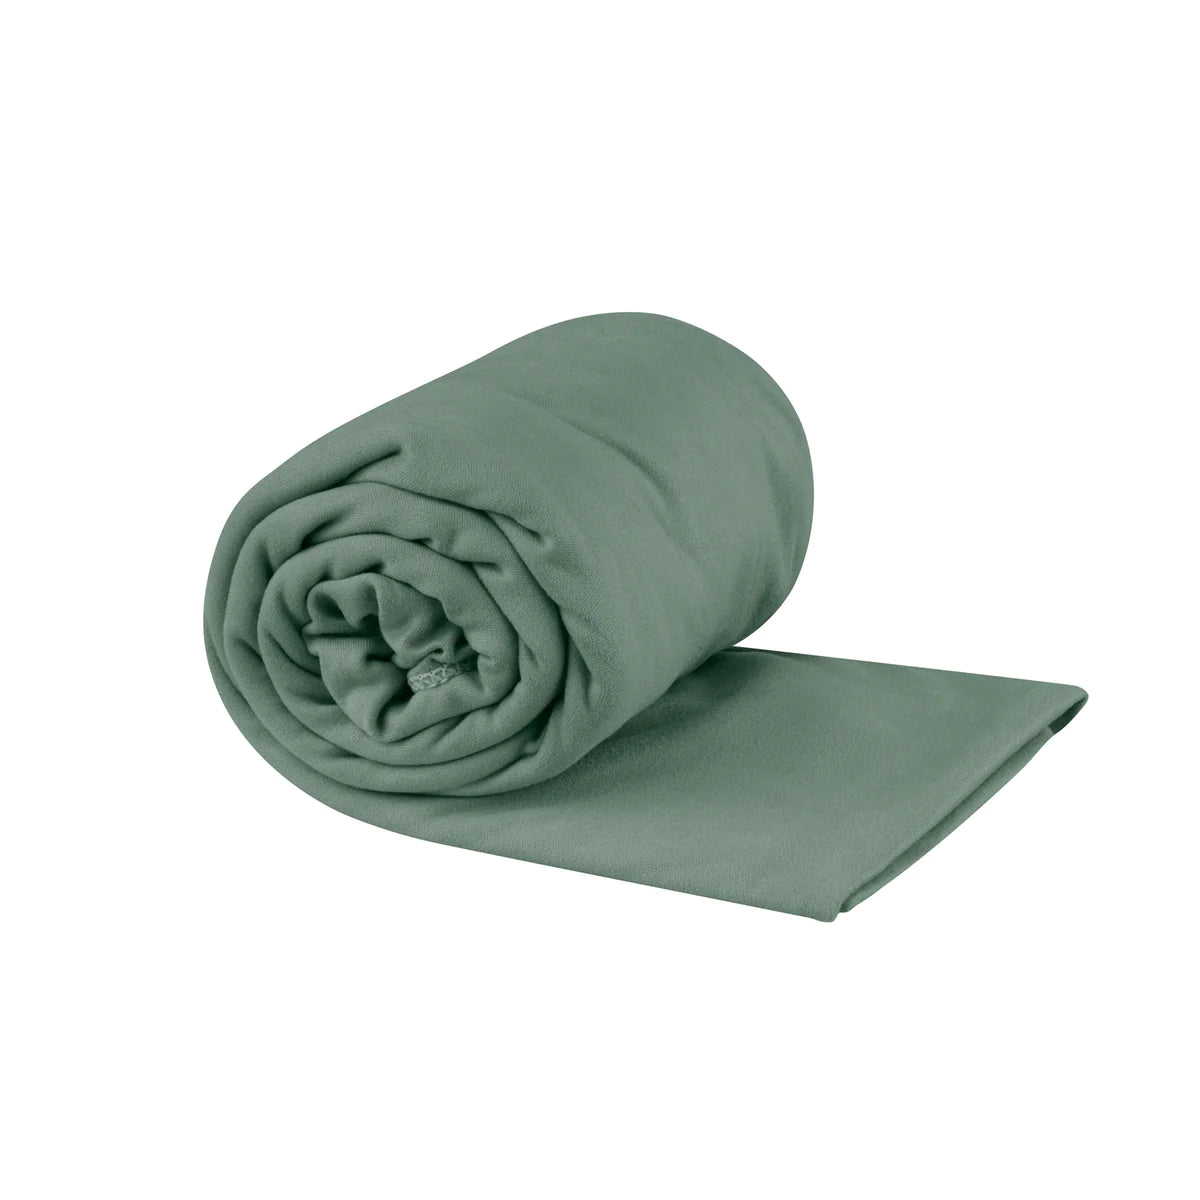 Sea to Summit - Pocket Towel X-Large - Sage Green